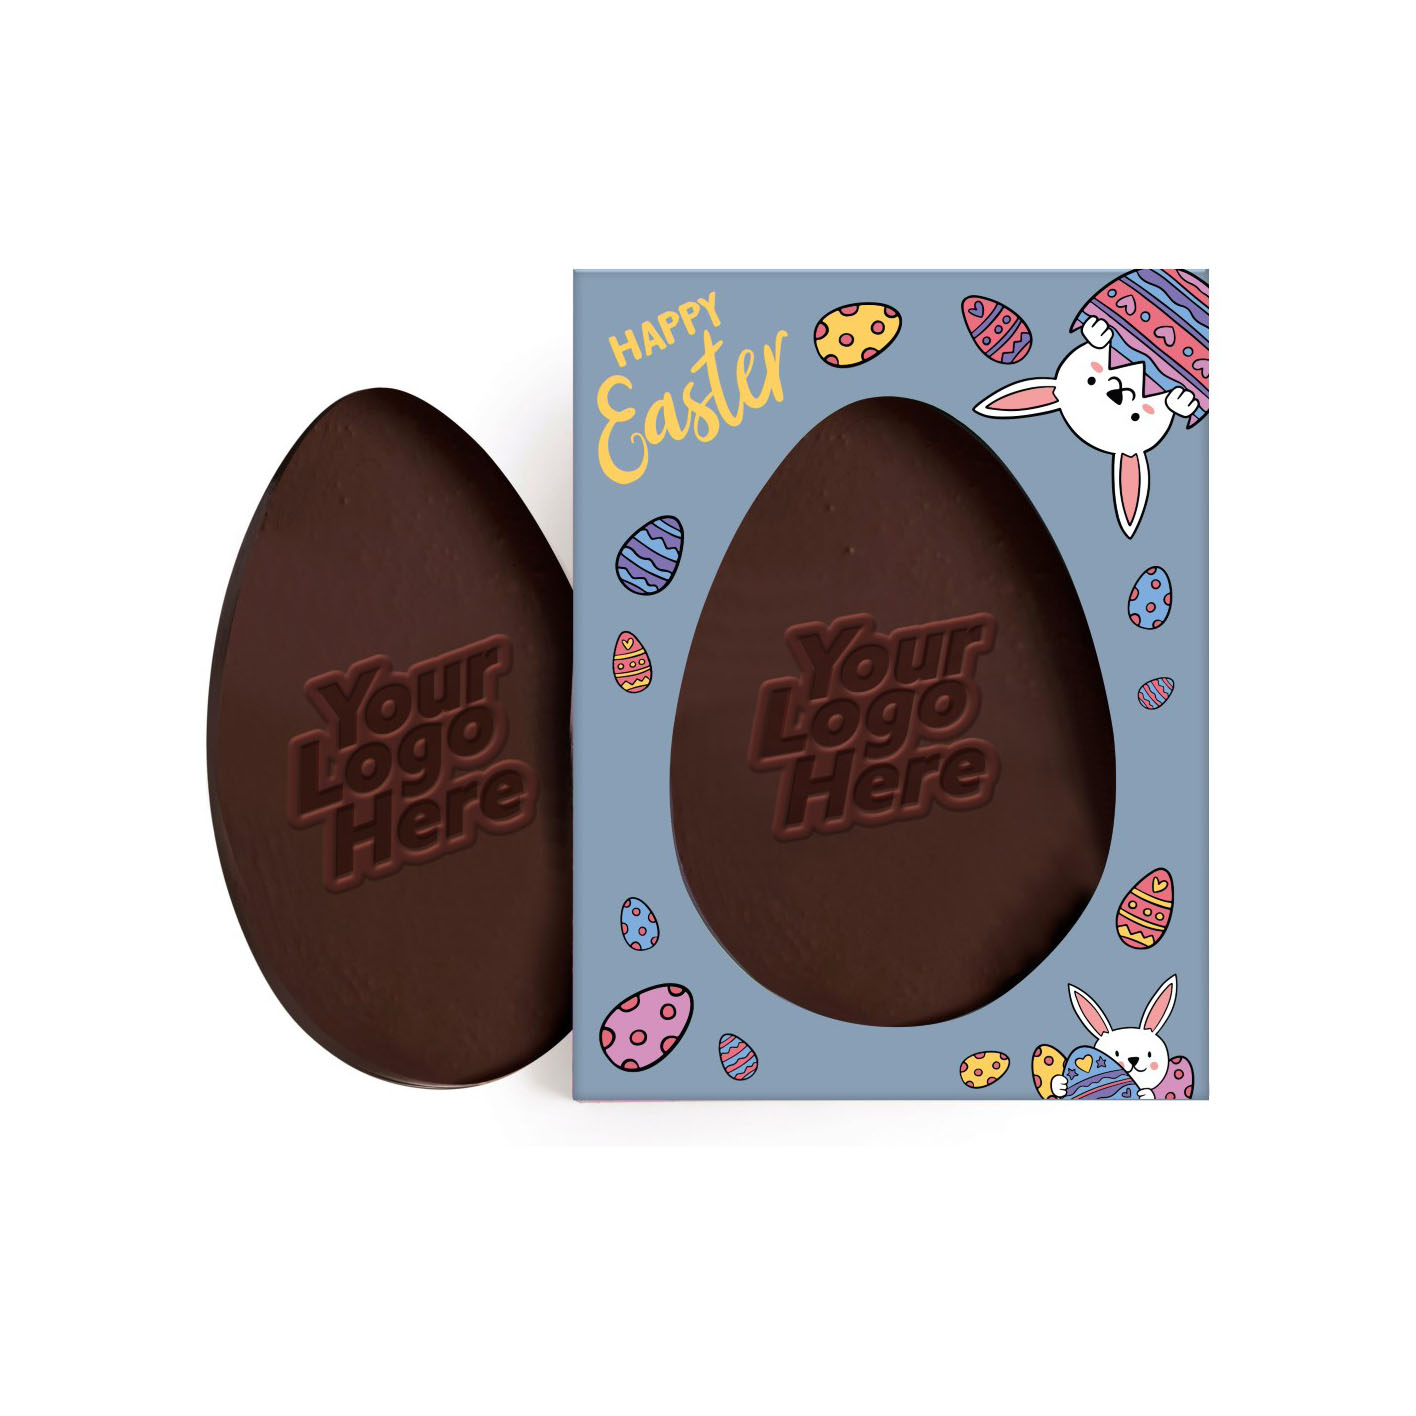 Easter - Eco Easter Window Box - Milk Chocolate - Bespoke Egg